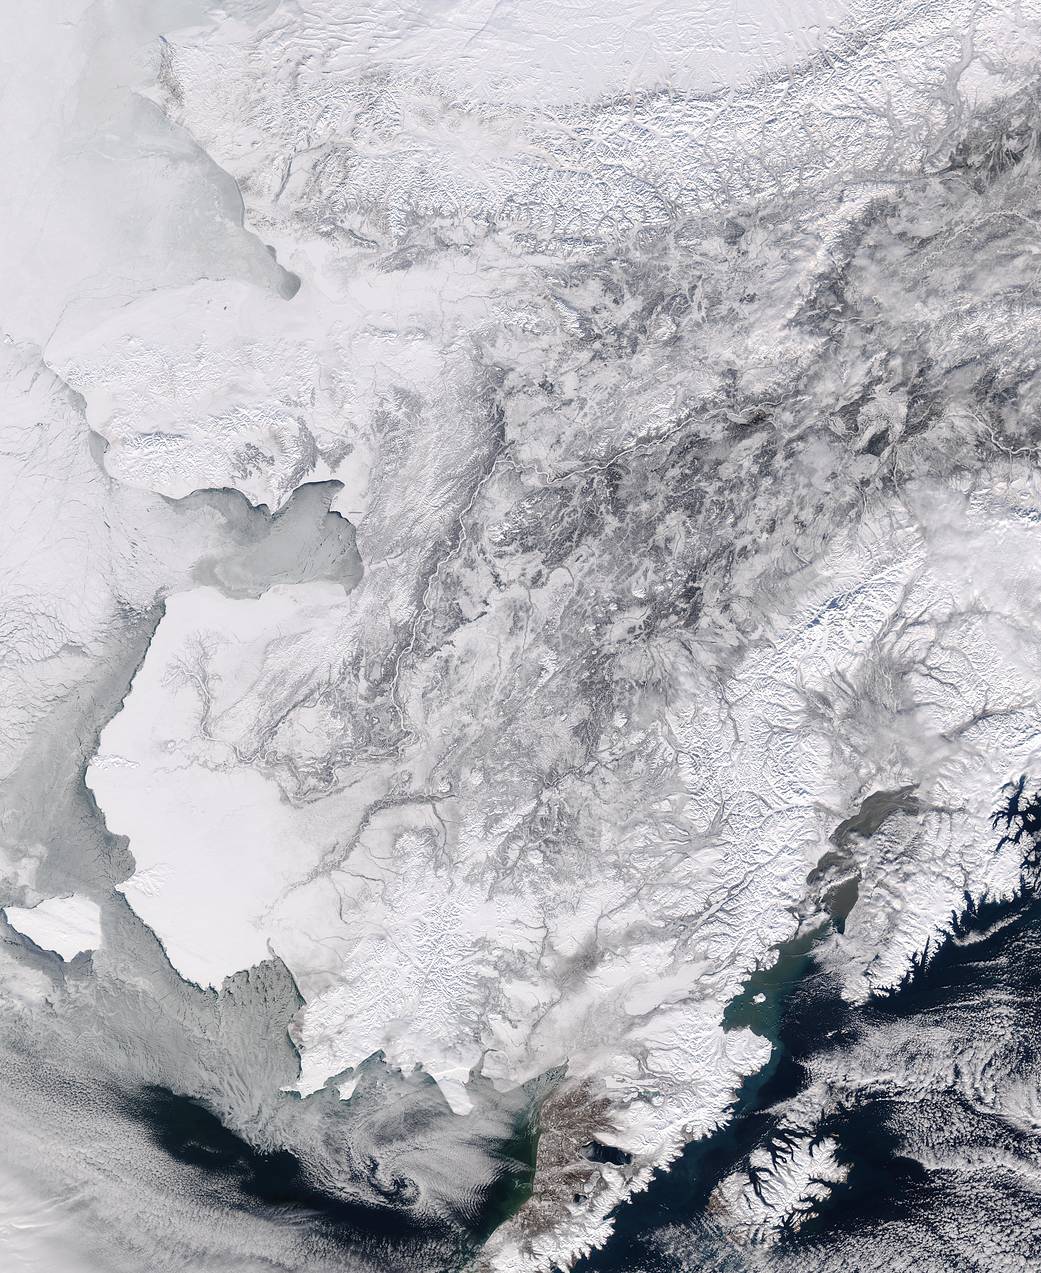 Satellite image of snow covered terrain in western Alaska